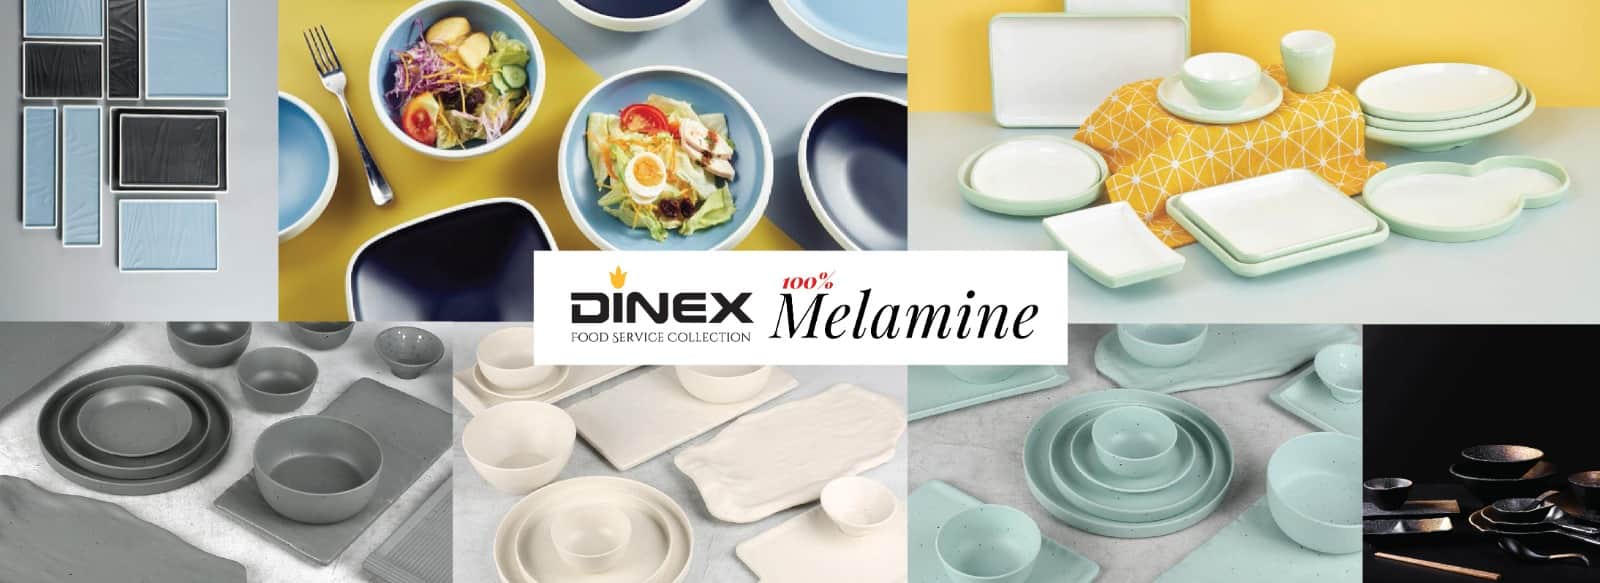 dinex melamine crockery for restaurant and hotels